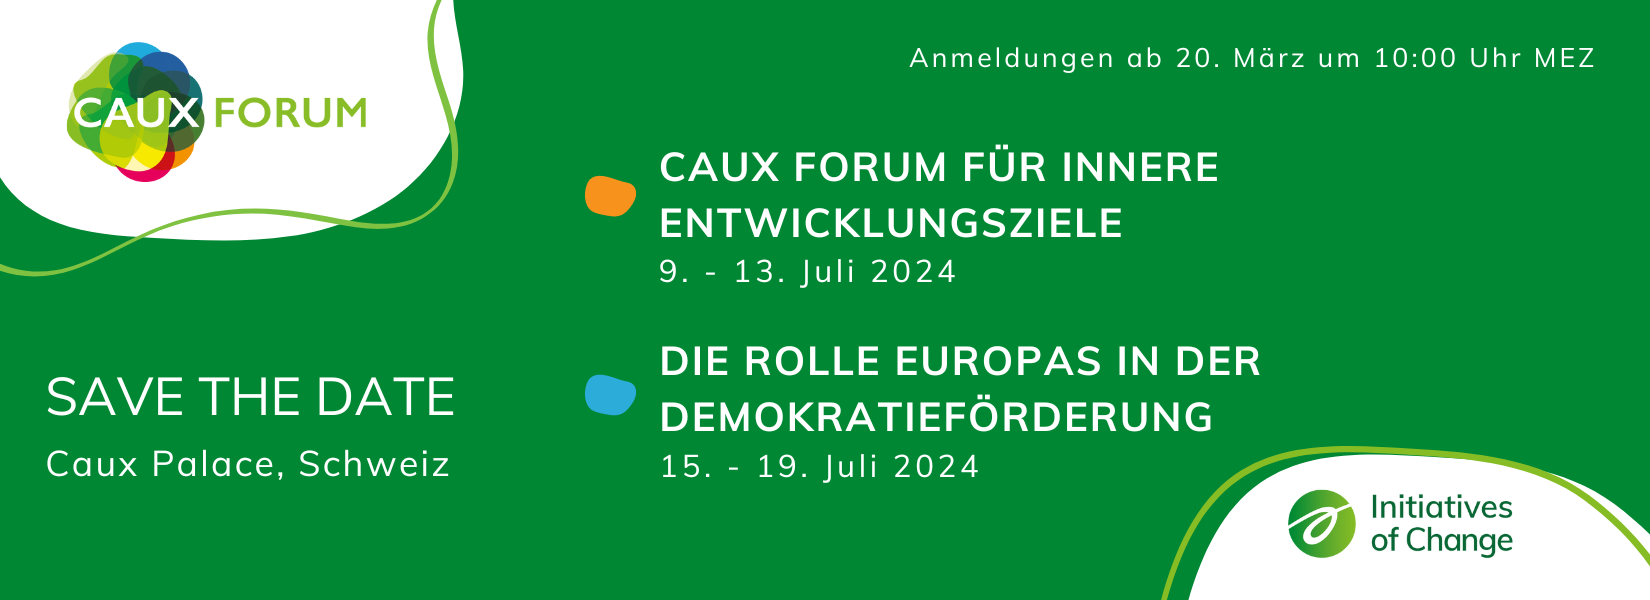 Caux Forum 2024 Save the Date banner DE green